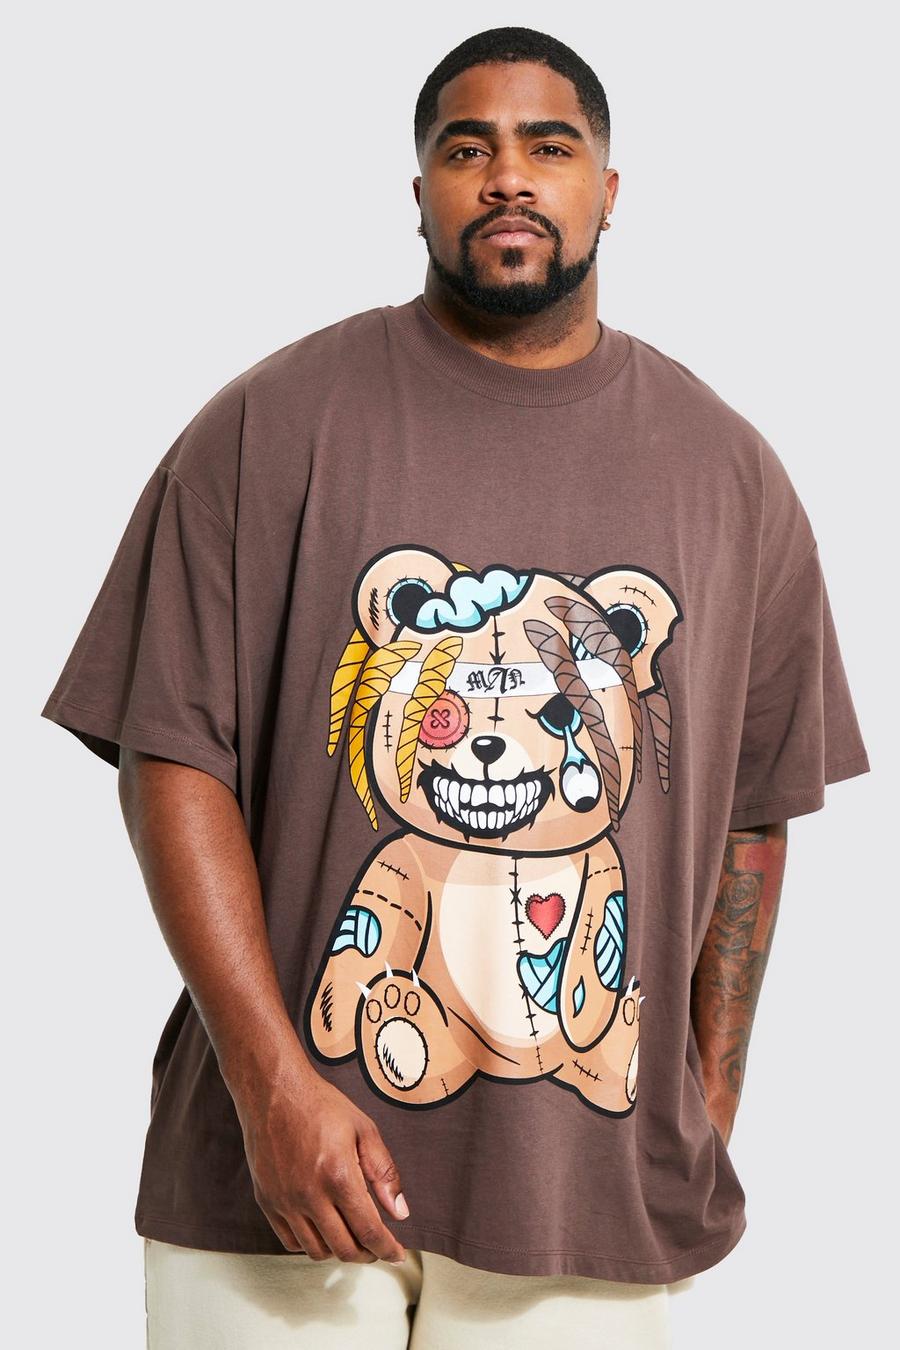 Boohoo UK - shirt - Men's Plus Oversized Angry Teddy Graphic T